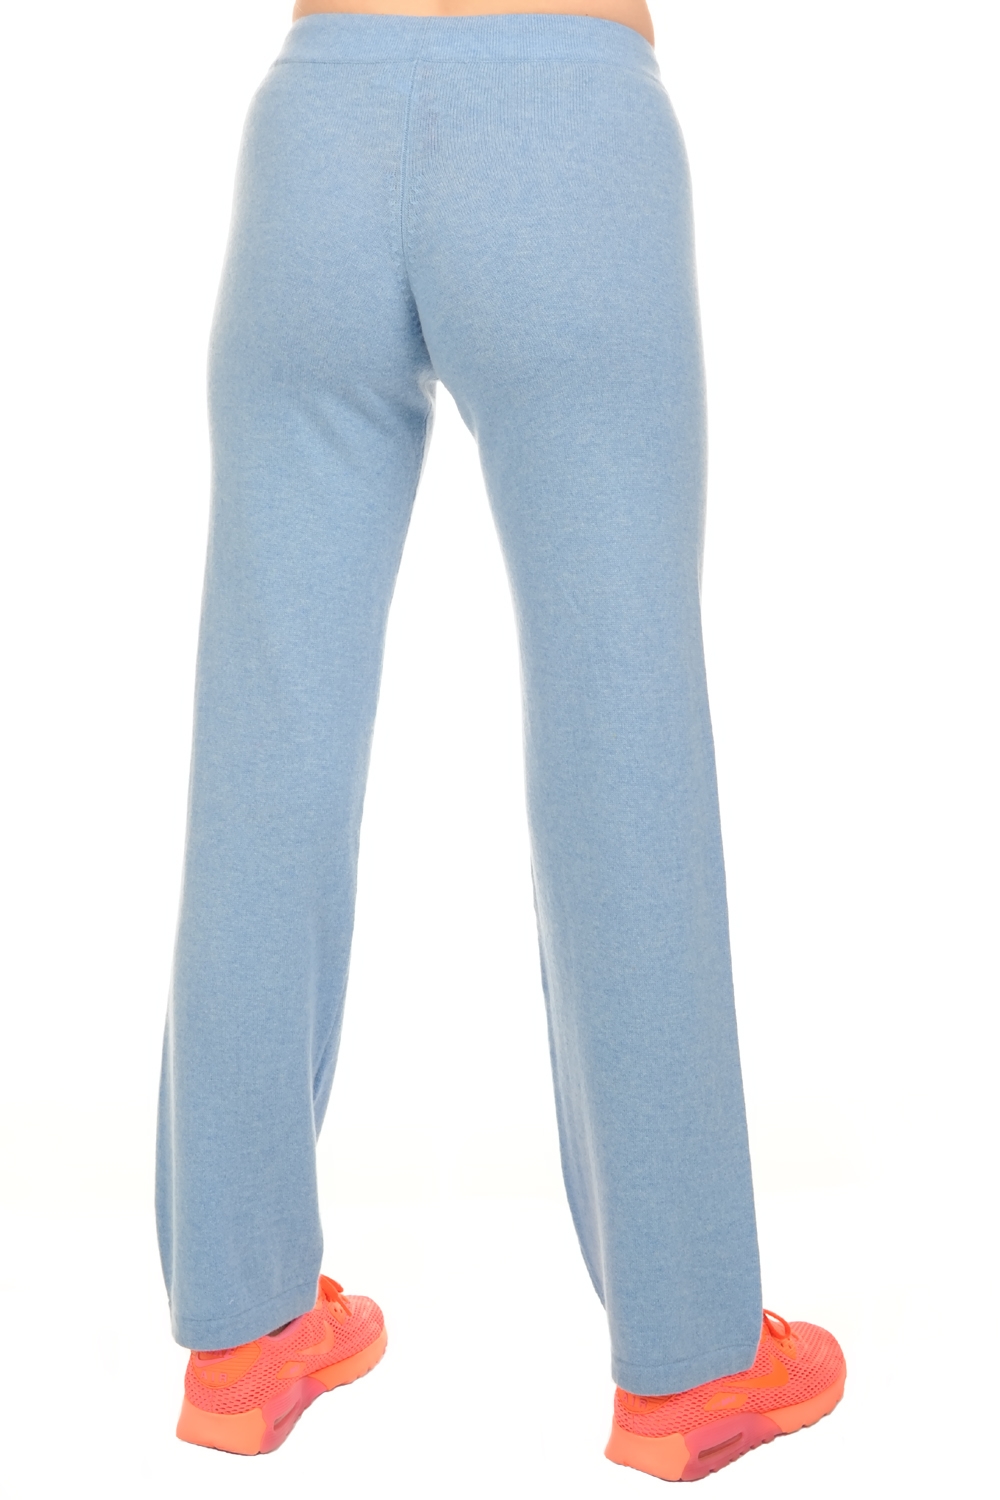 Cashmere ladies trousers leggings malice azur blue chine 4xl